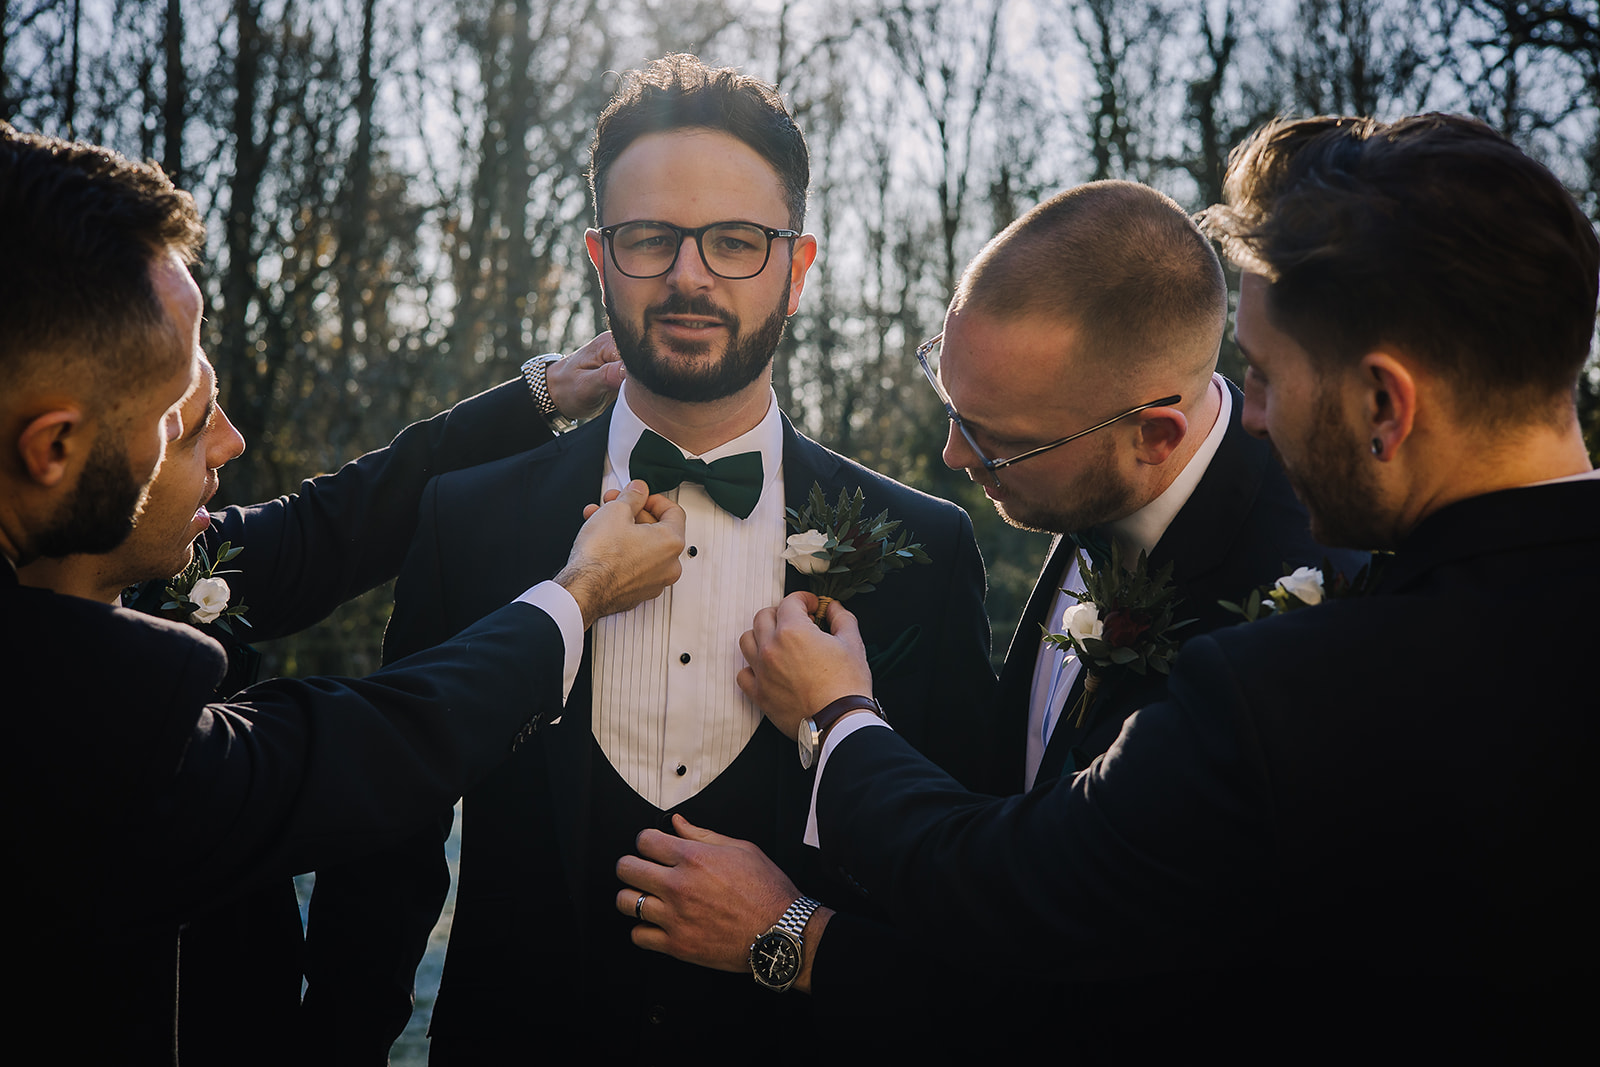 groom in tuxedo 